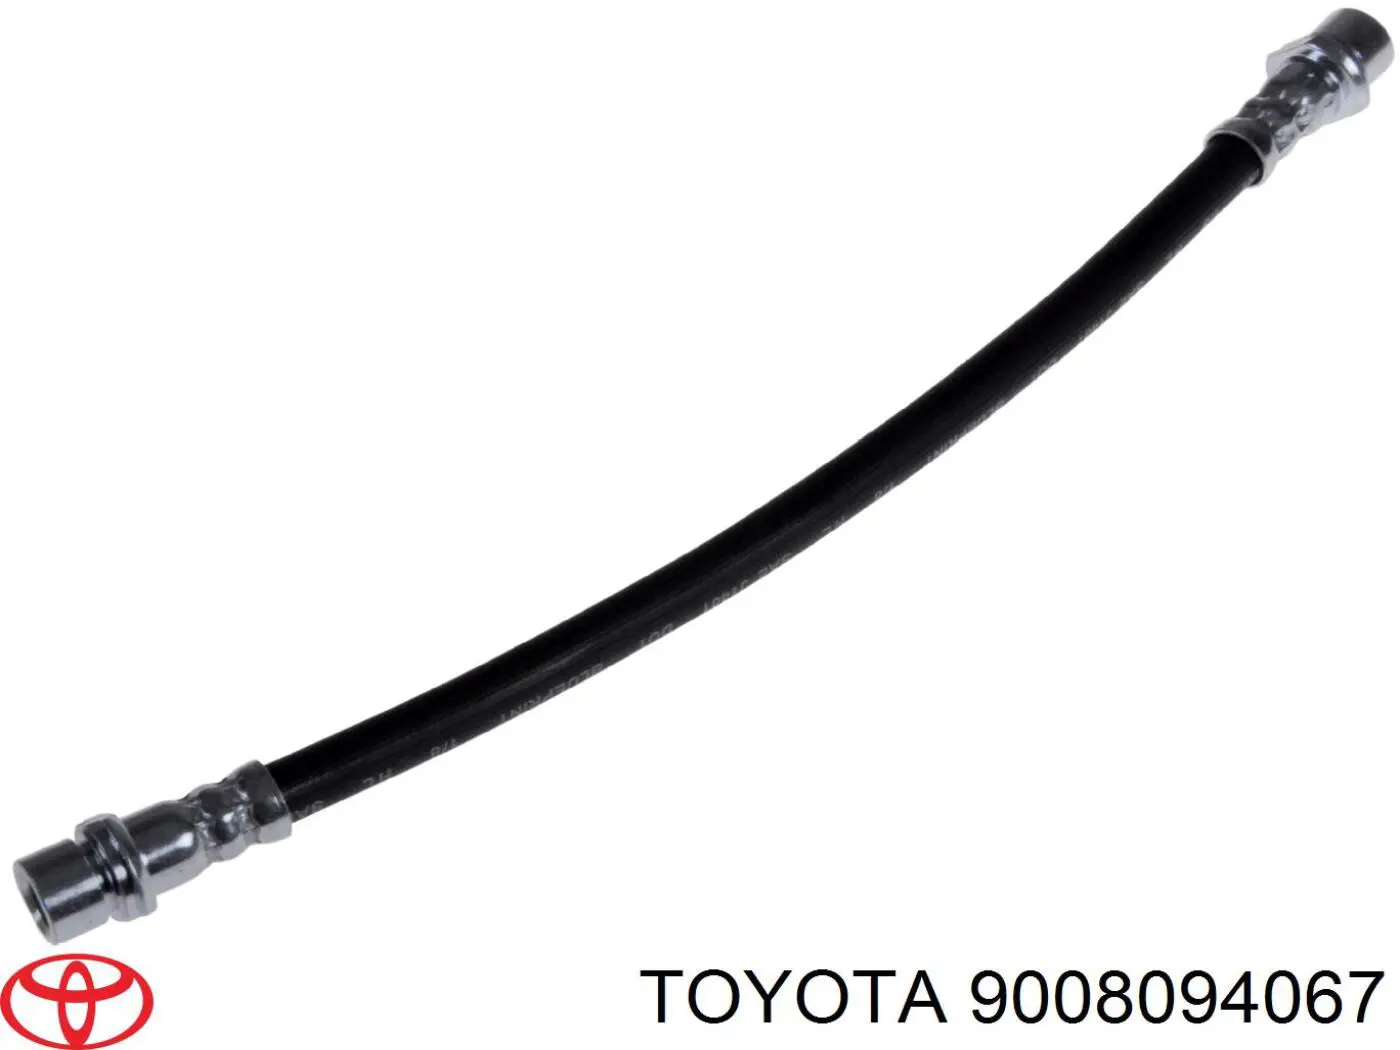 Tubo liquido de freno trasero para Toyota Corolla 